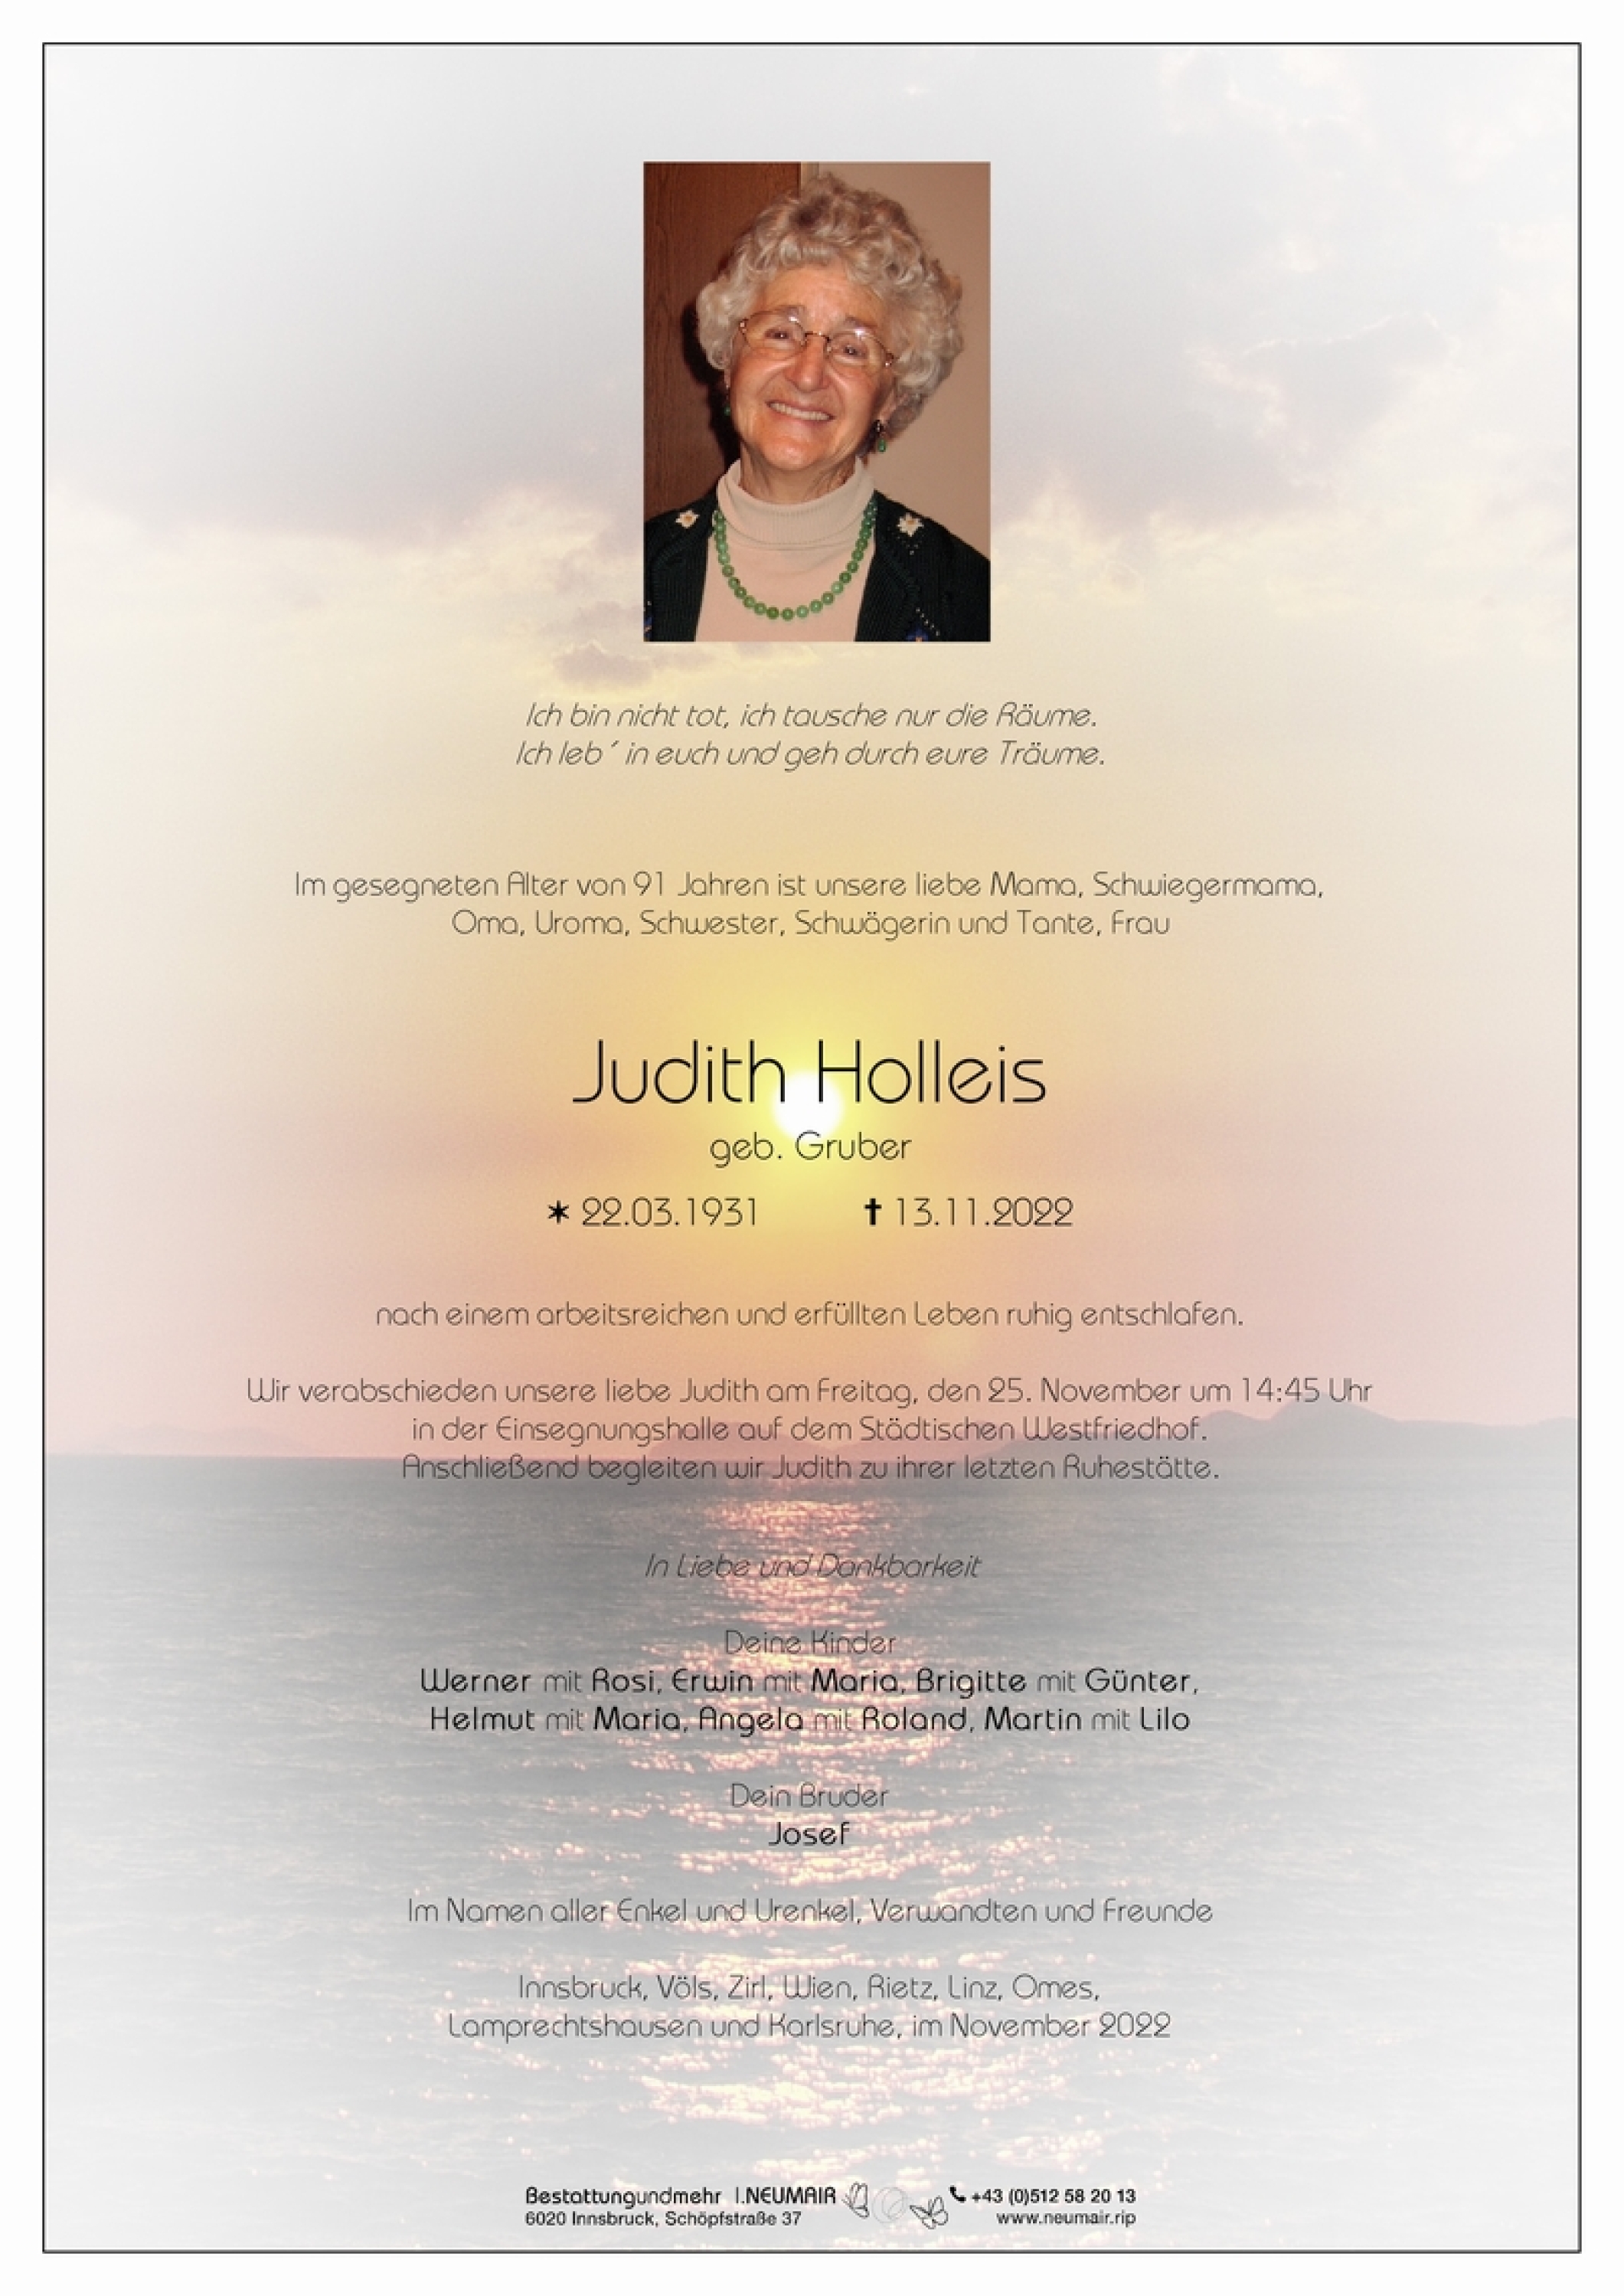 Judith Holleis